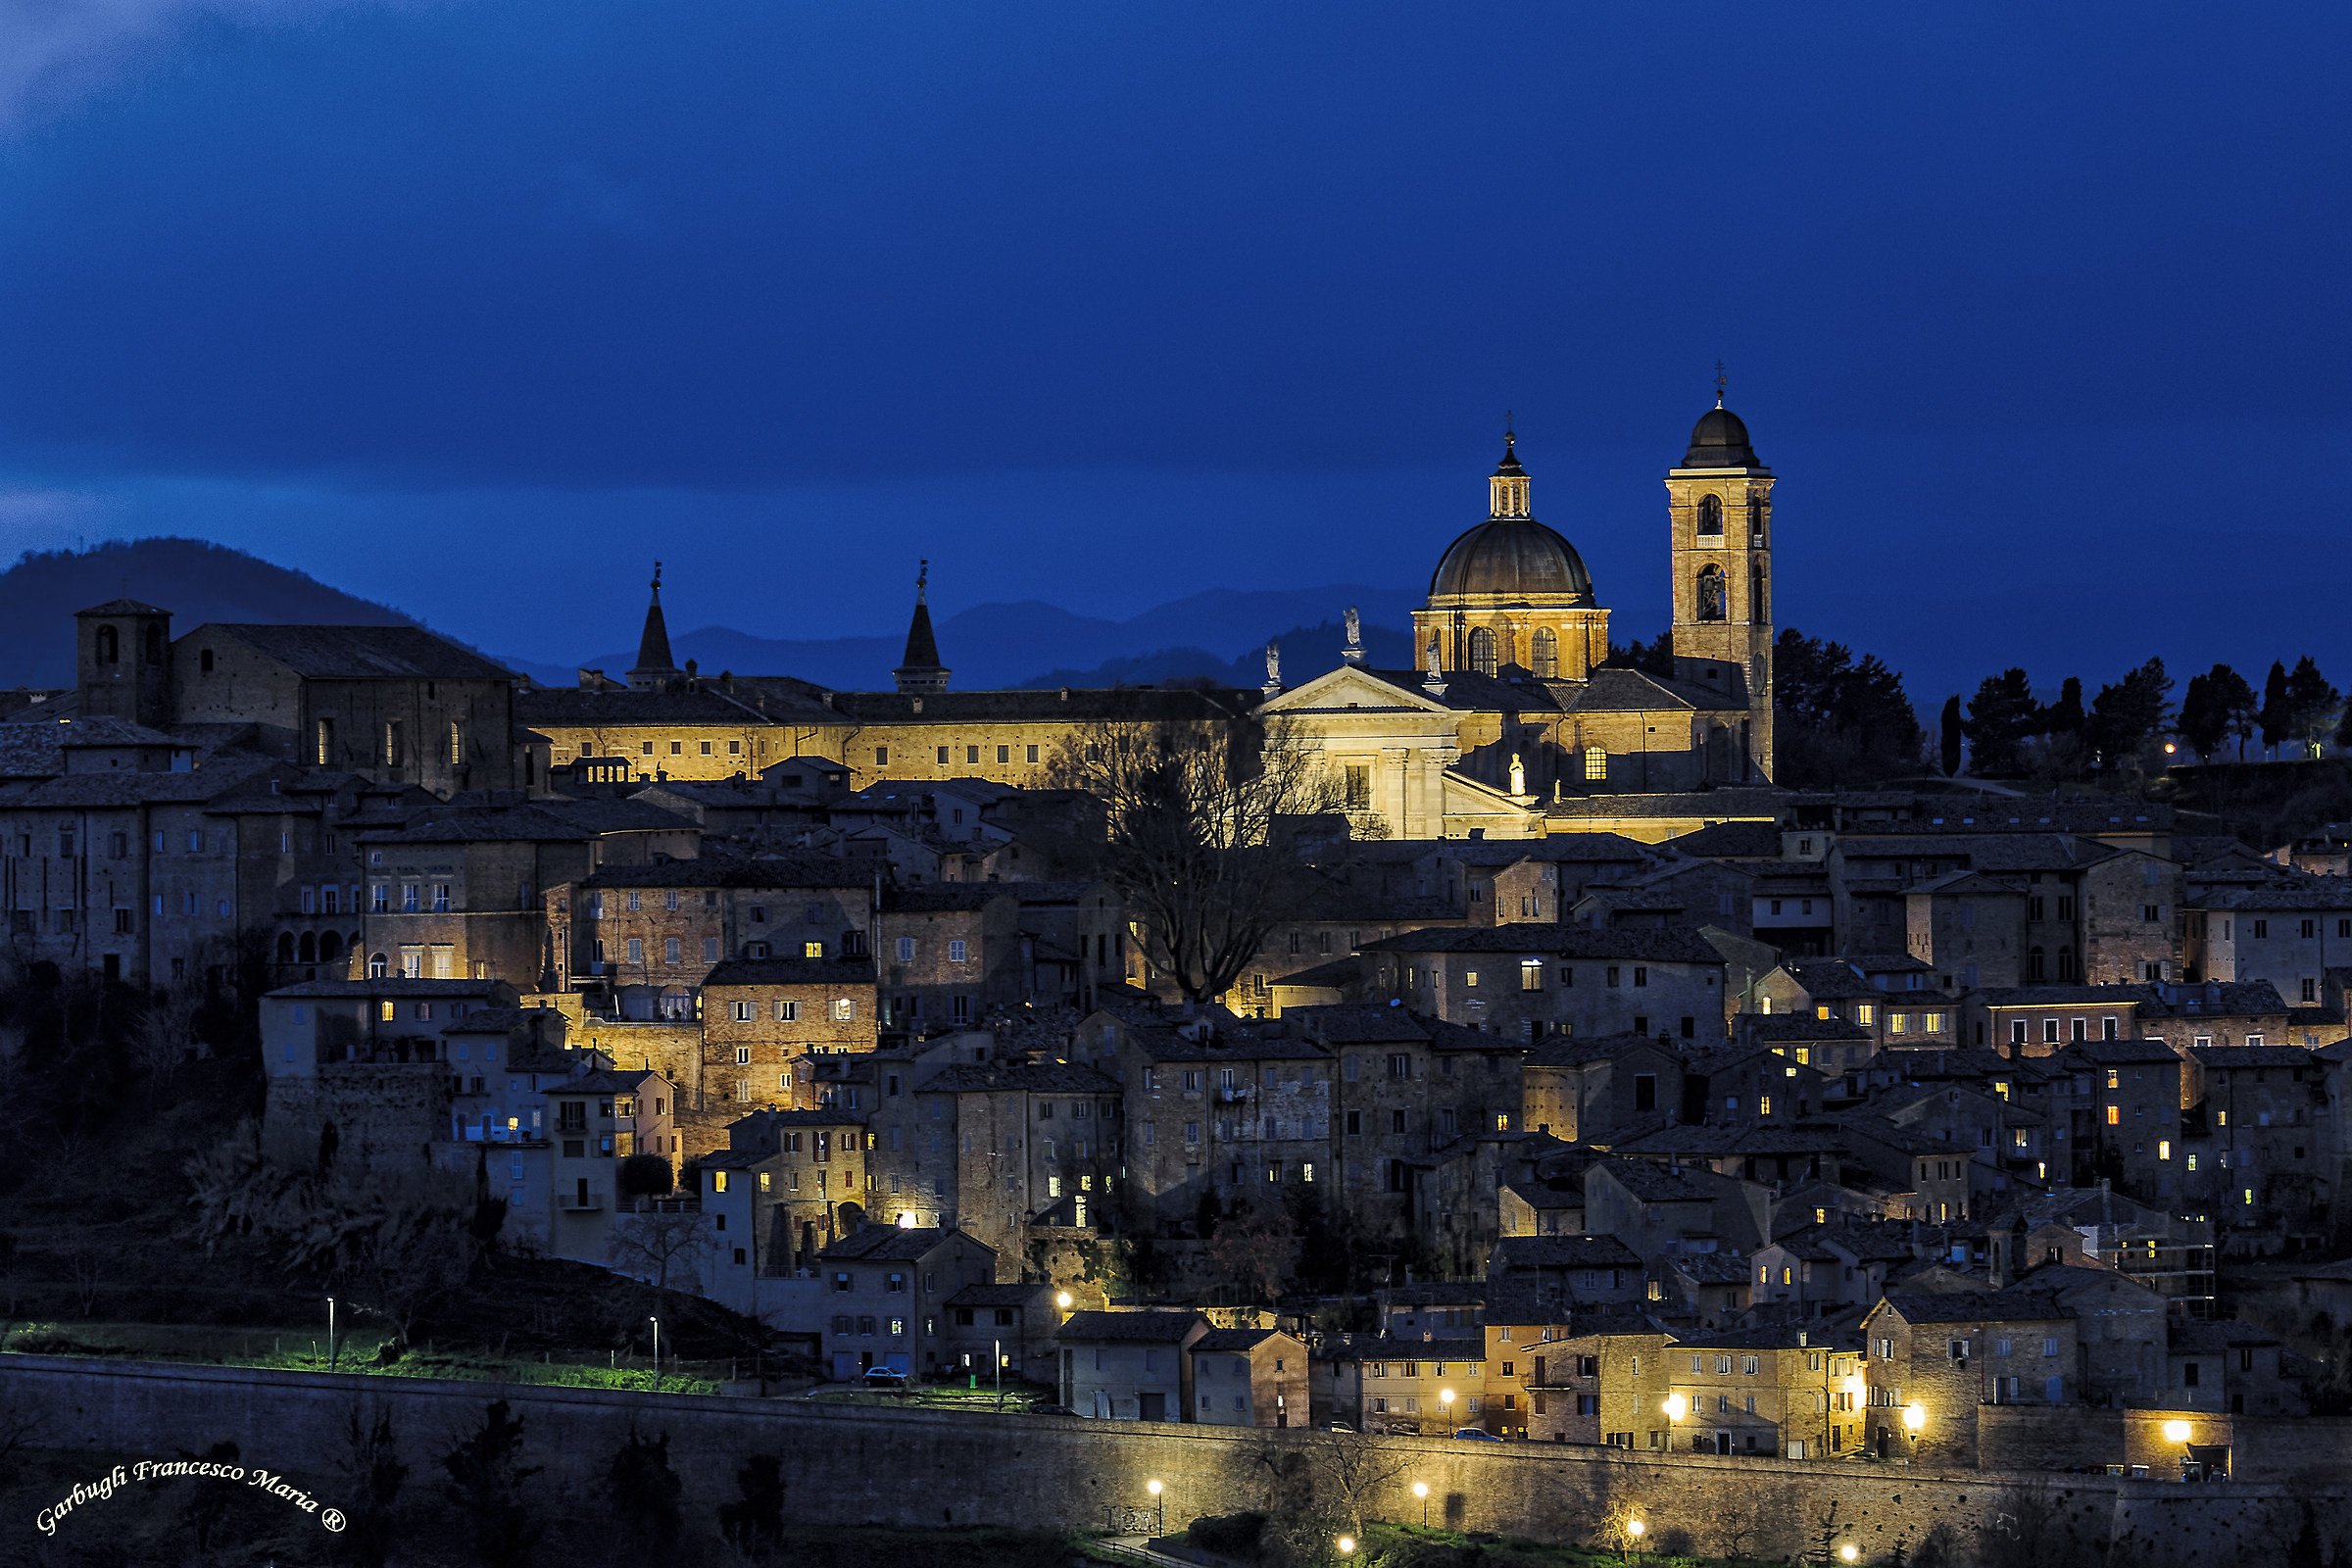 Urbino within the walls...